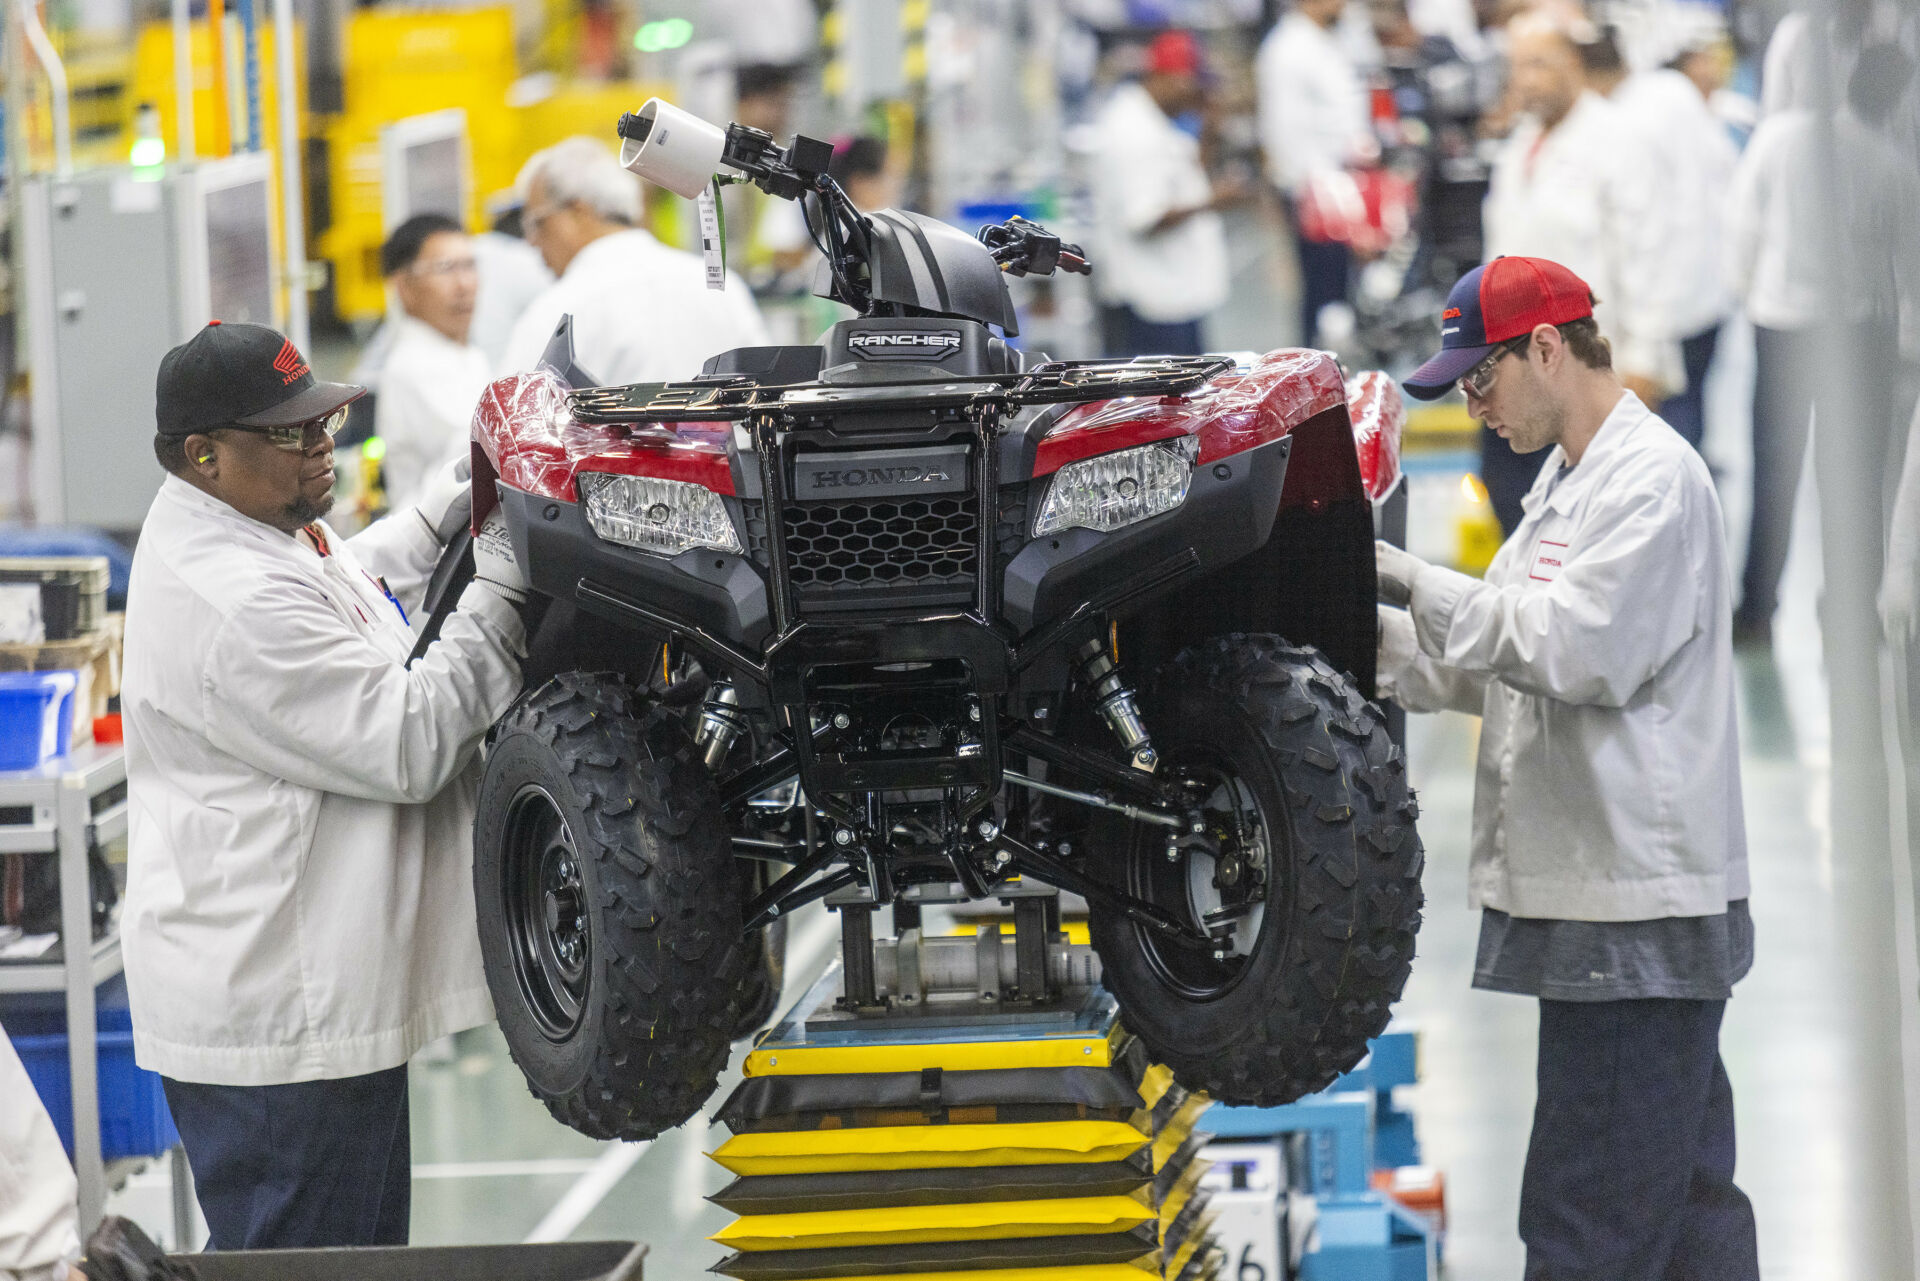 Workers at Honda North Carolina Manufacturing are now producing full-size Honda ATVs. Photo courtesy American Honda.